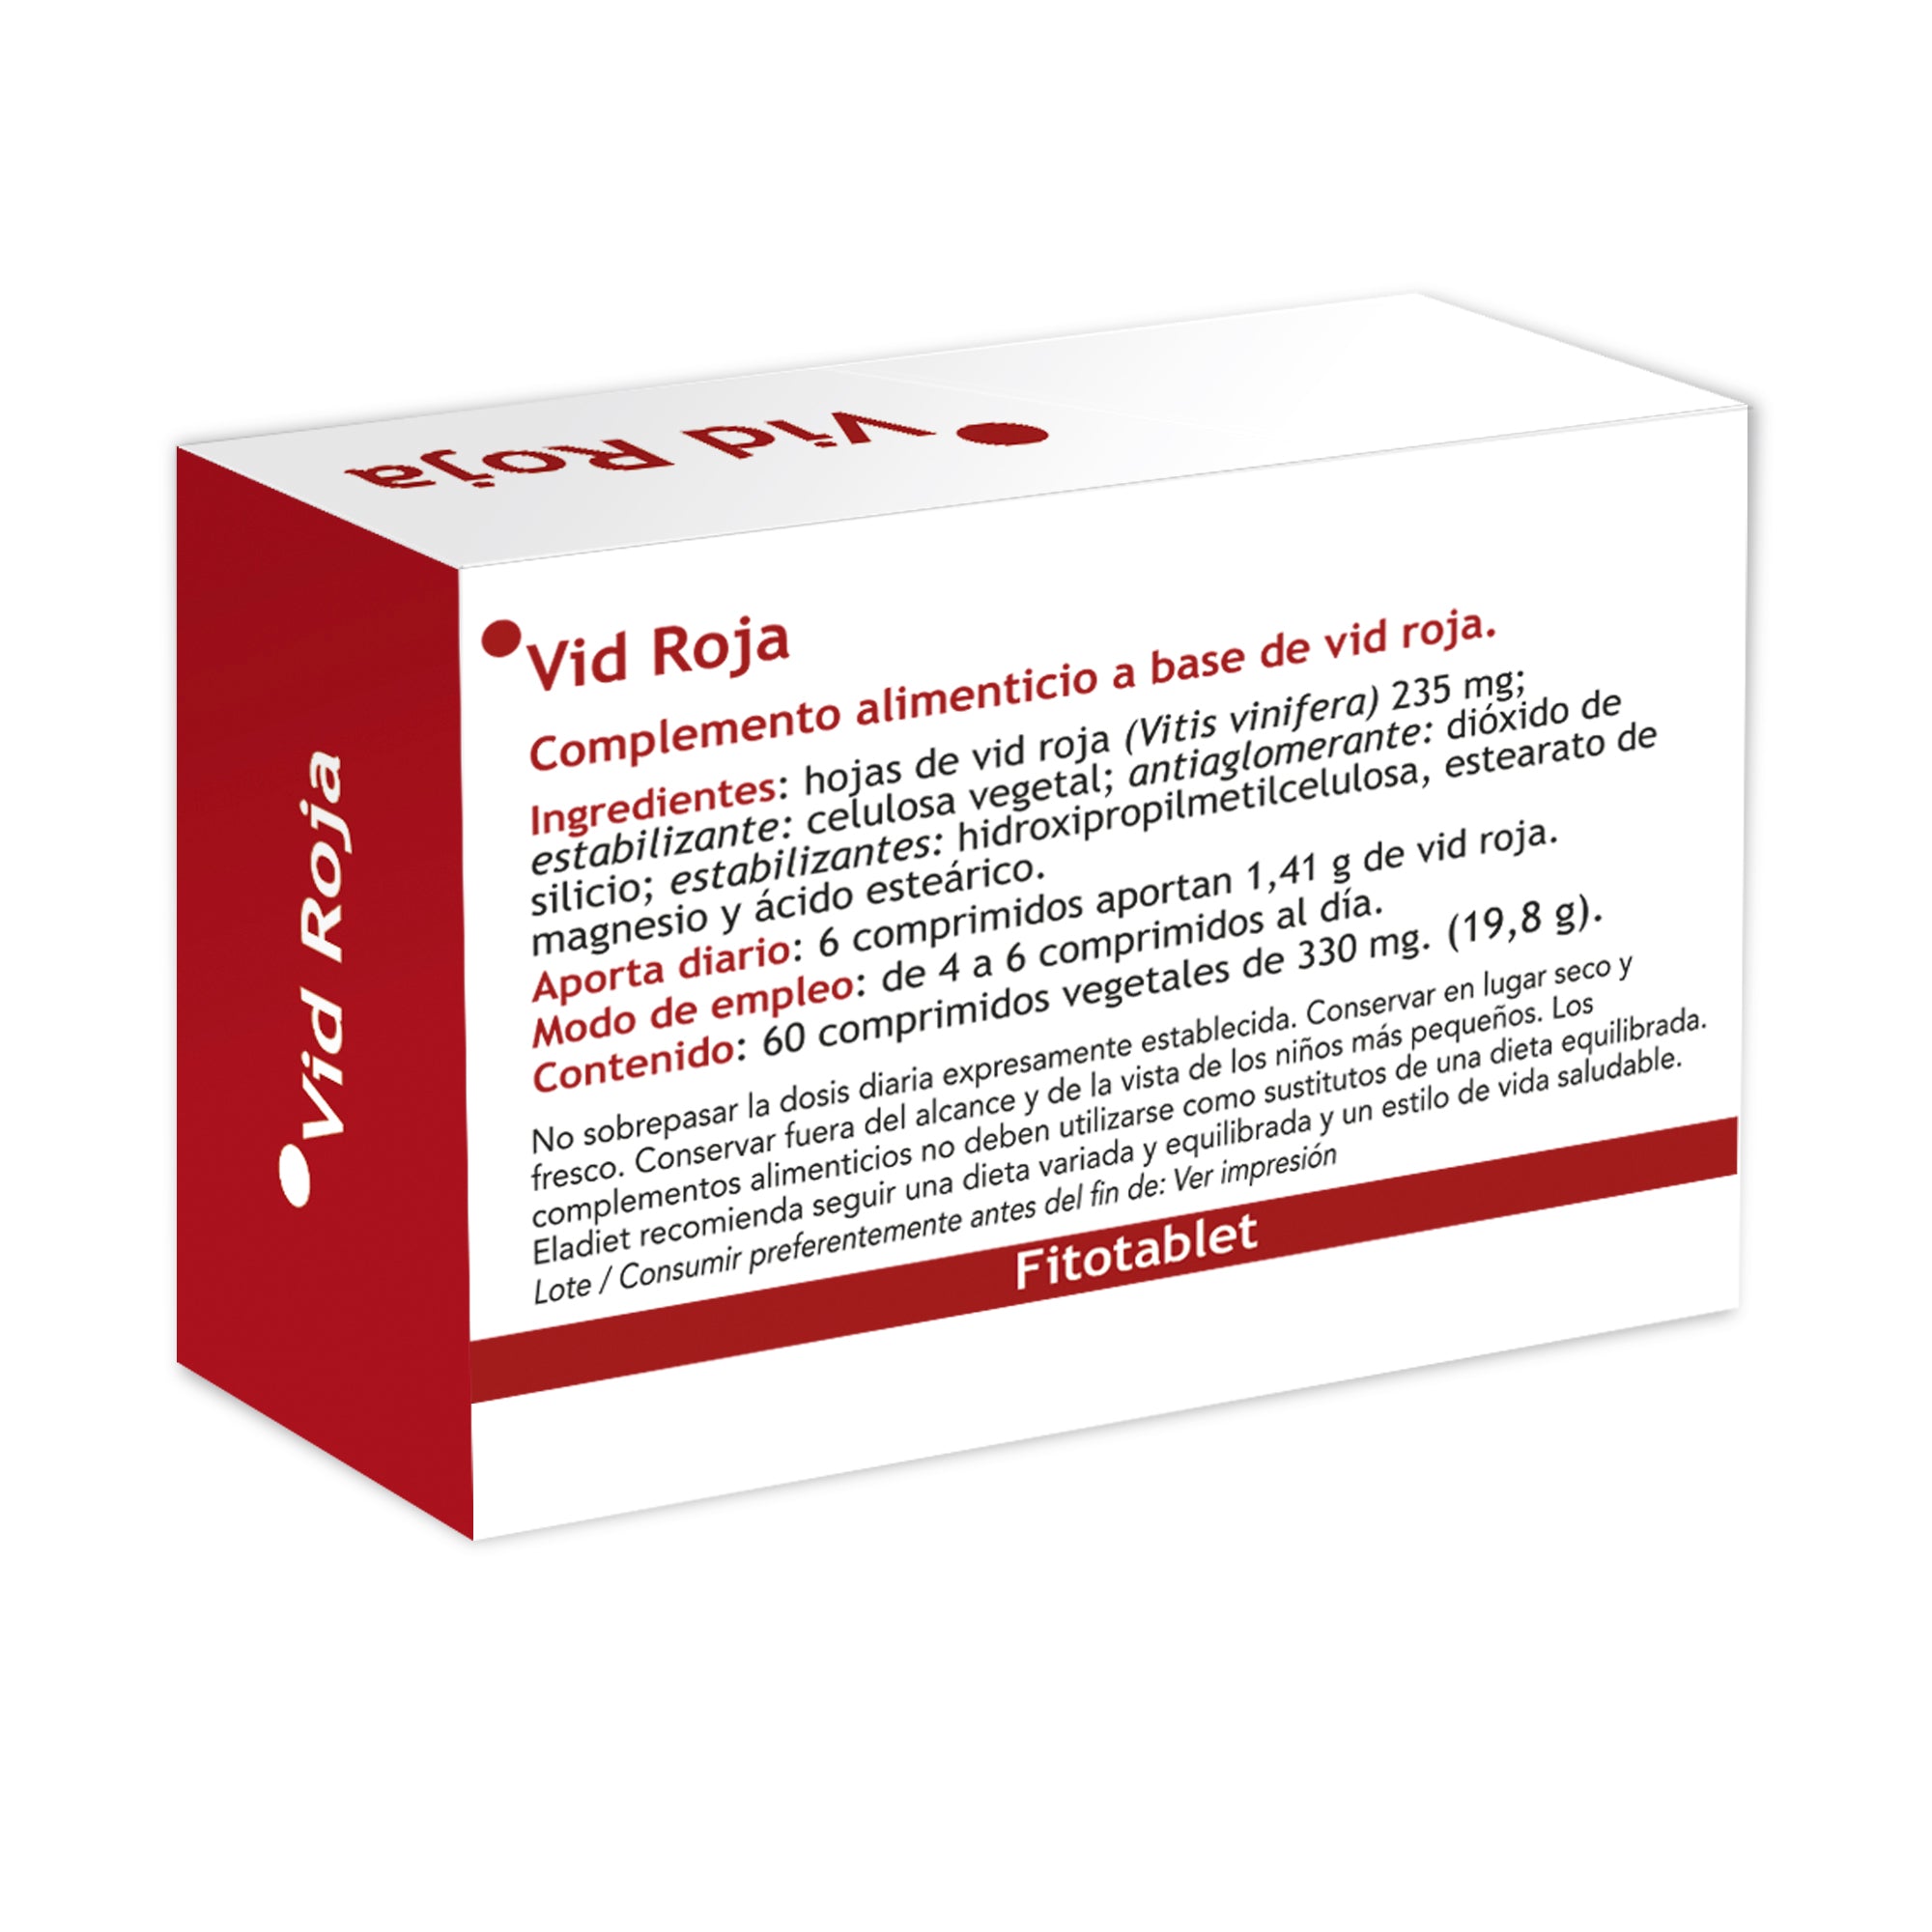 Eladiet - Fitotablet Vid Roja 330Mg 60 Comprimidos - Biopharmacia, Parafarmacia online